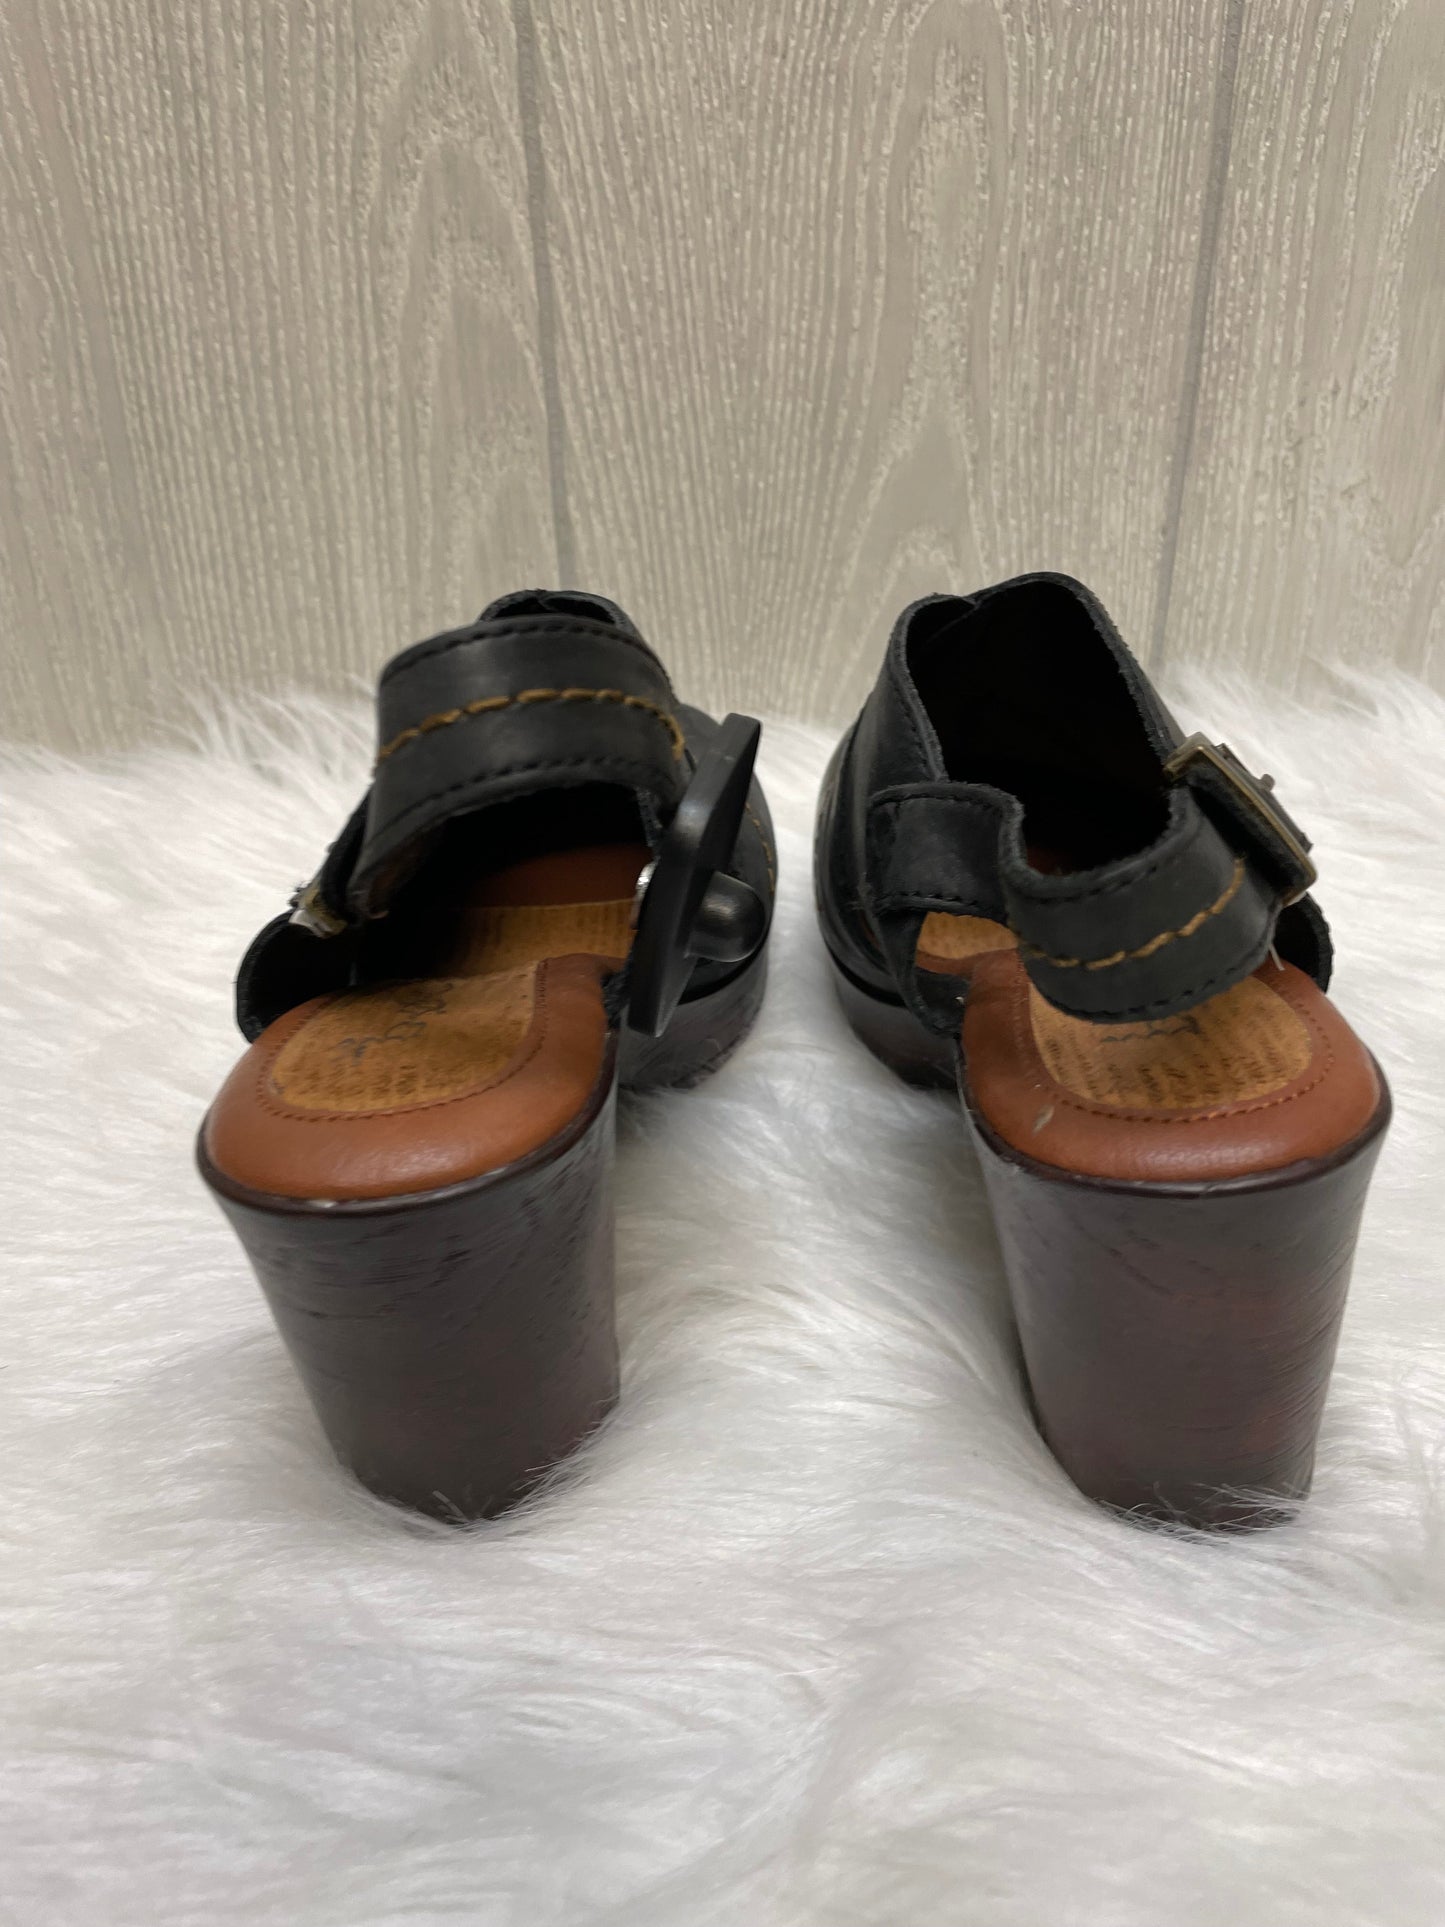 Black Shoes Heels Block Boc, Size 7